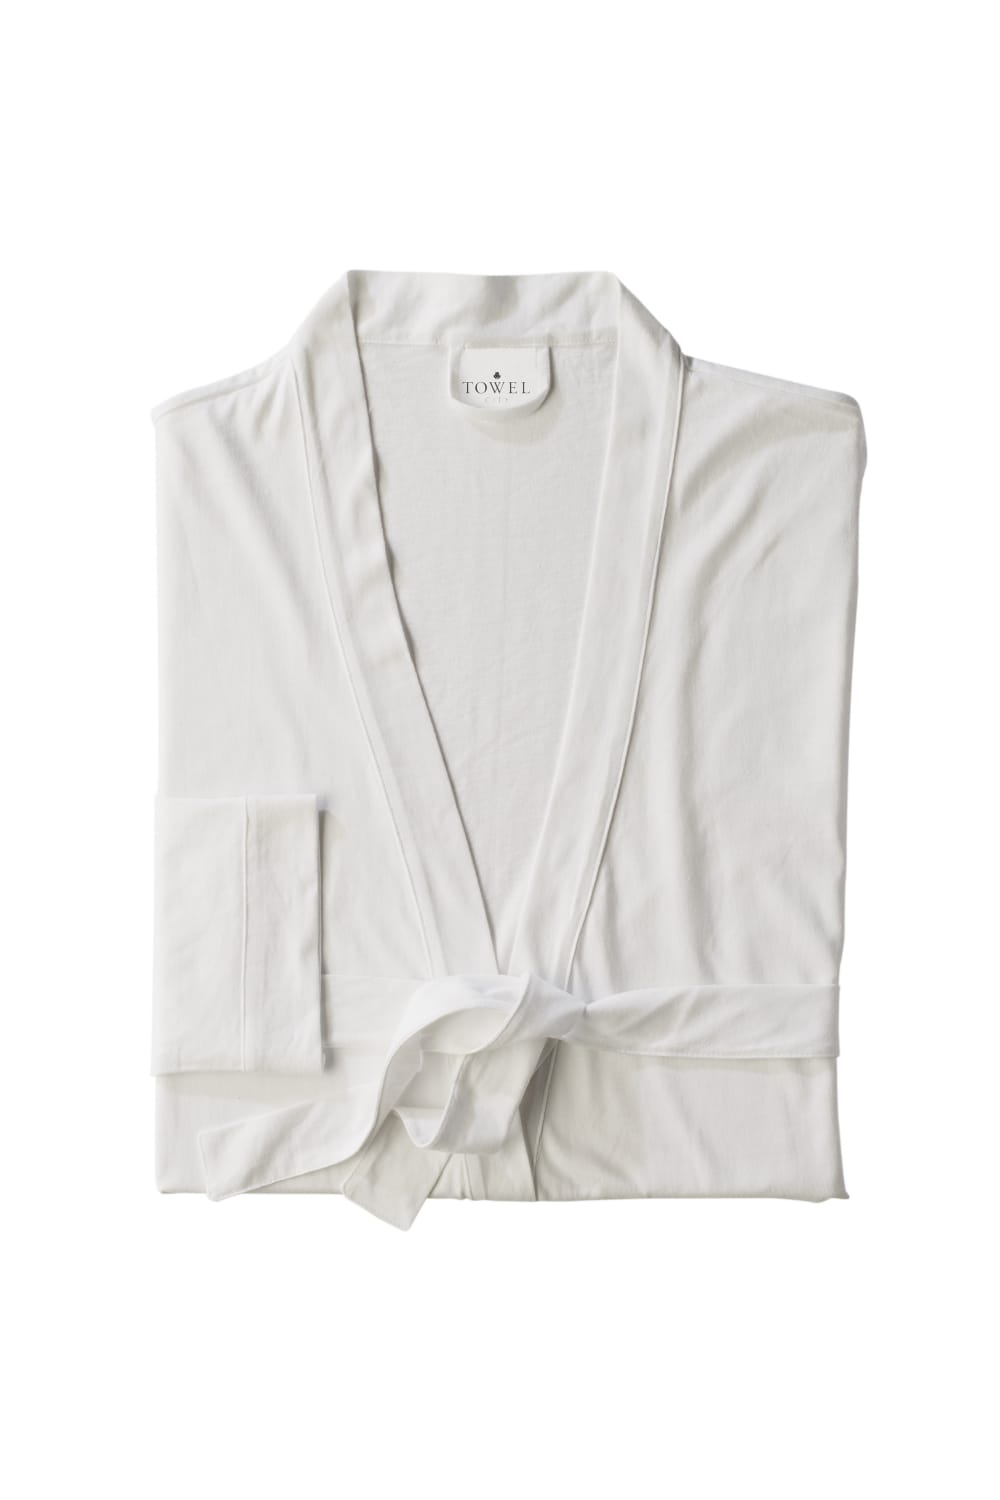 Towel City Womens/Ladies Wrap Bath Robe / Towel (180 GSM) (White) (L)